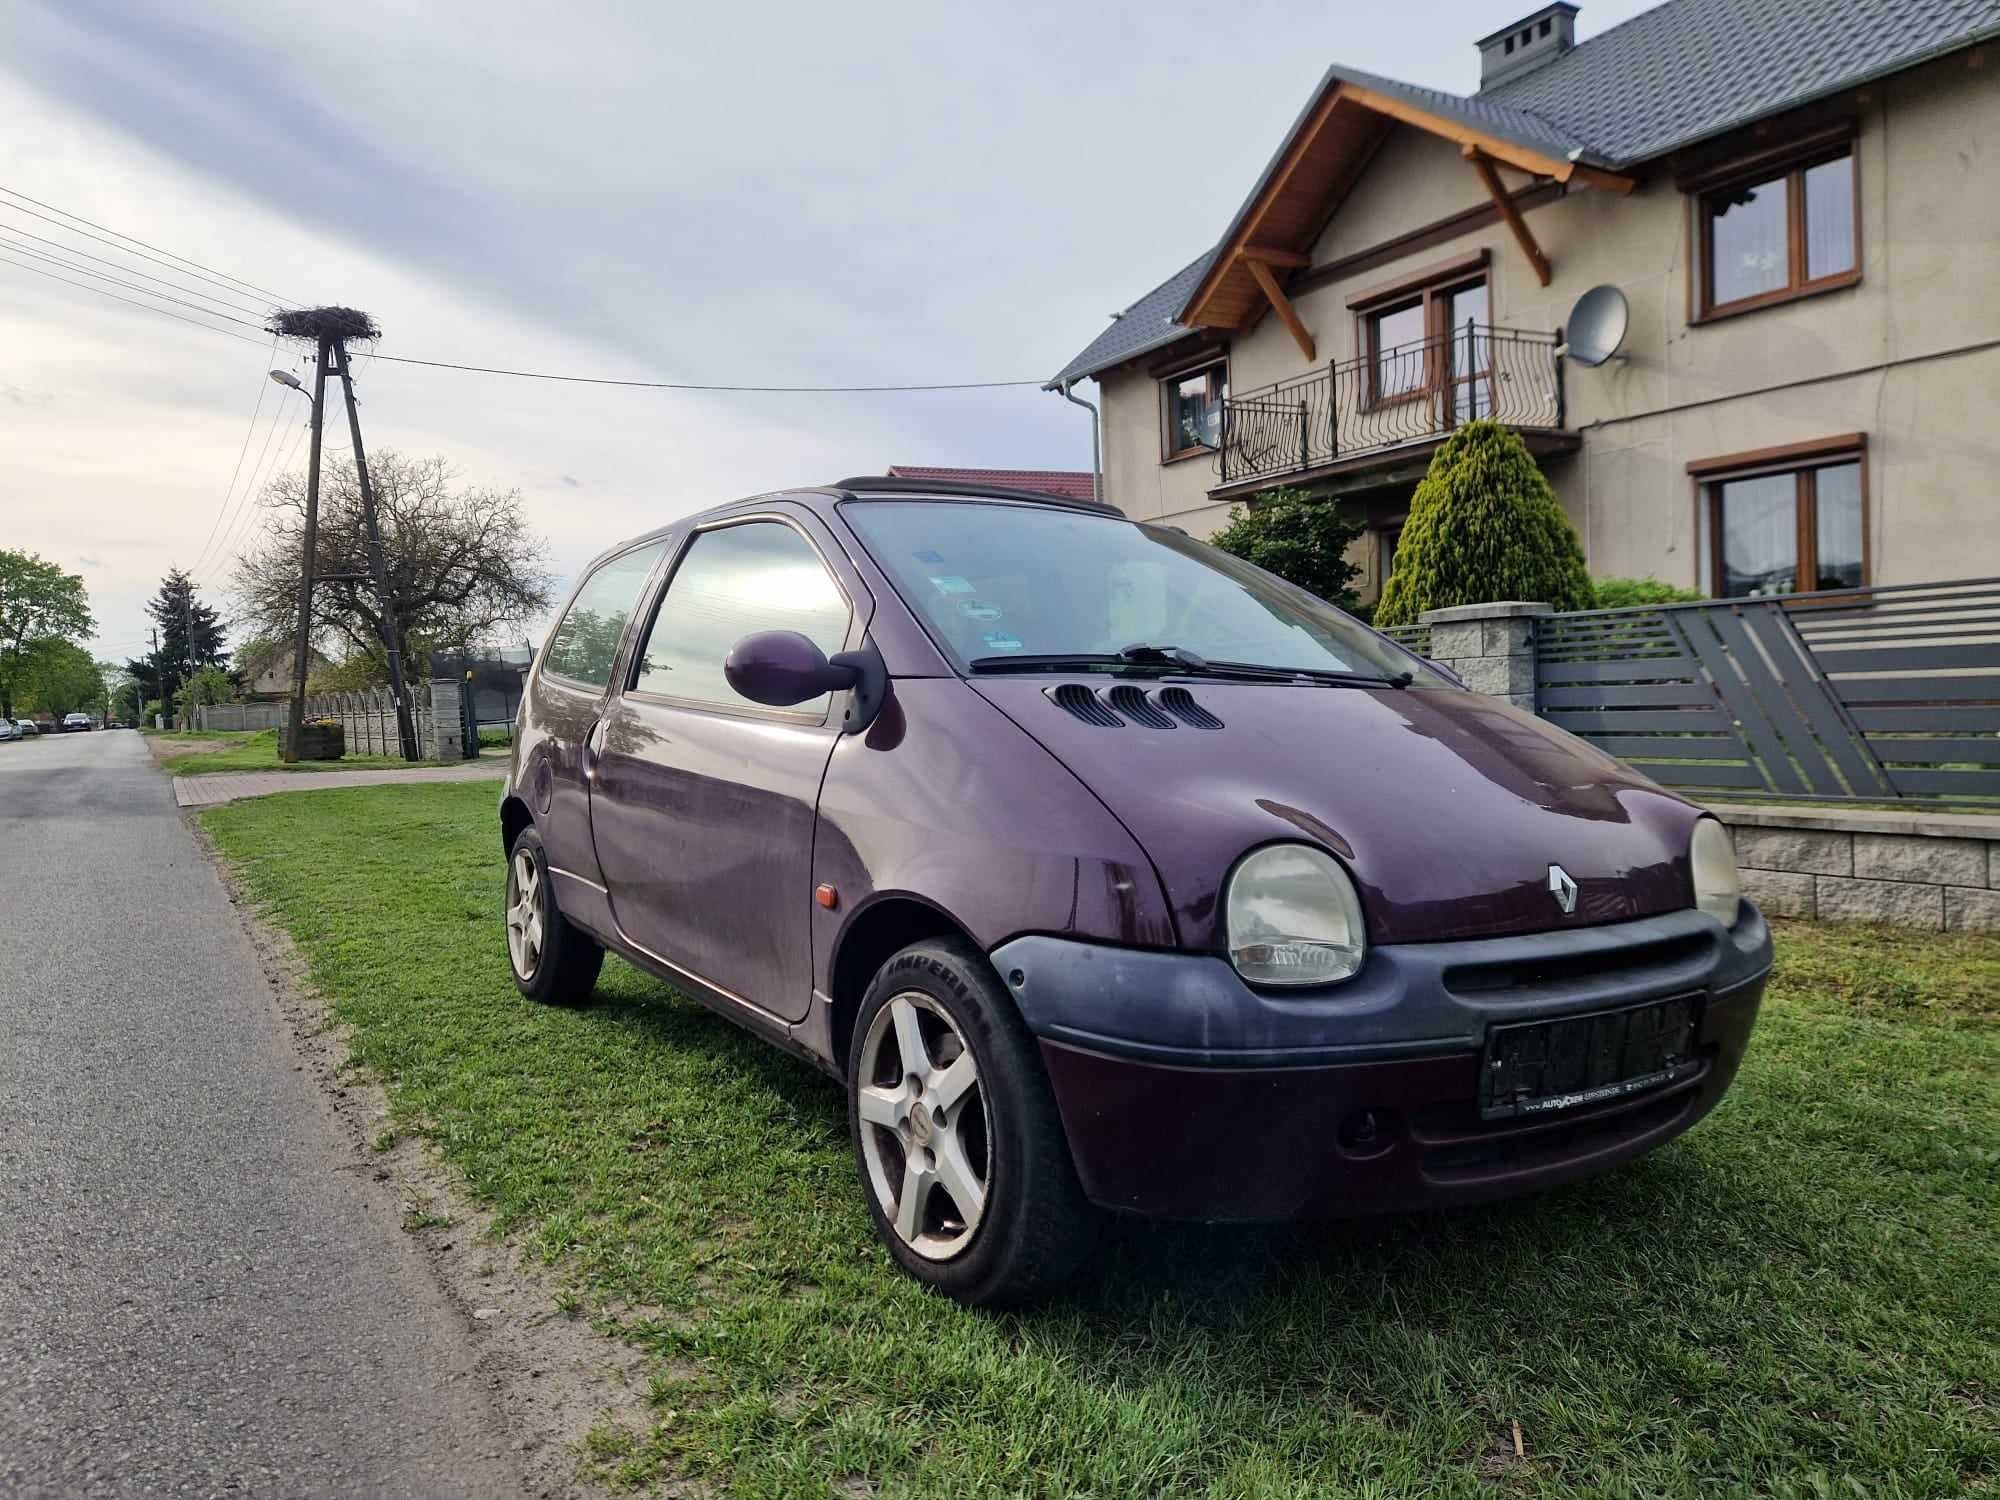 Renault Twingo 1.2 benzyna 2001